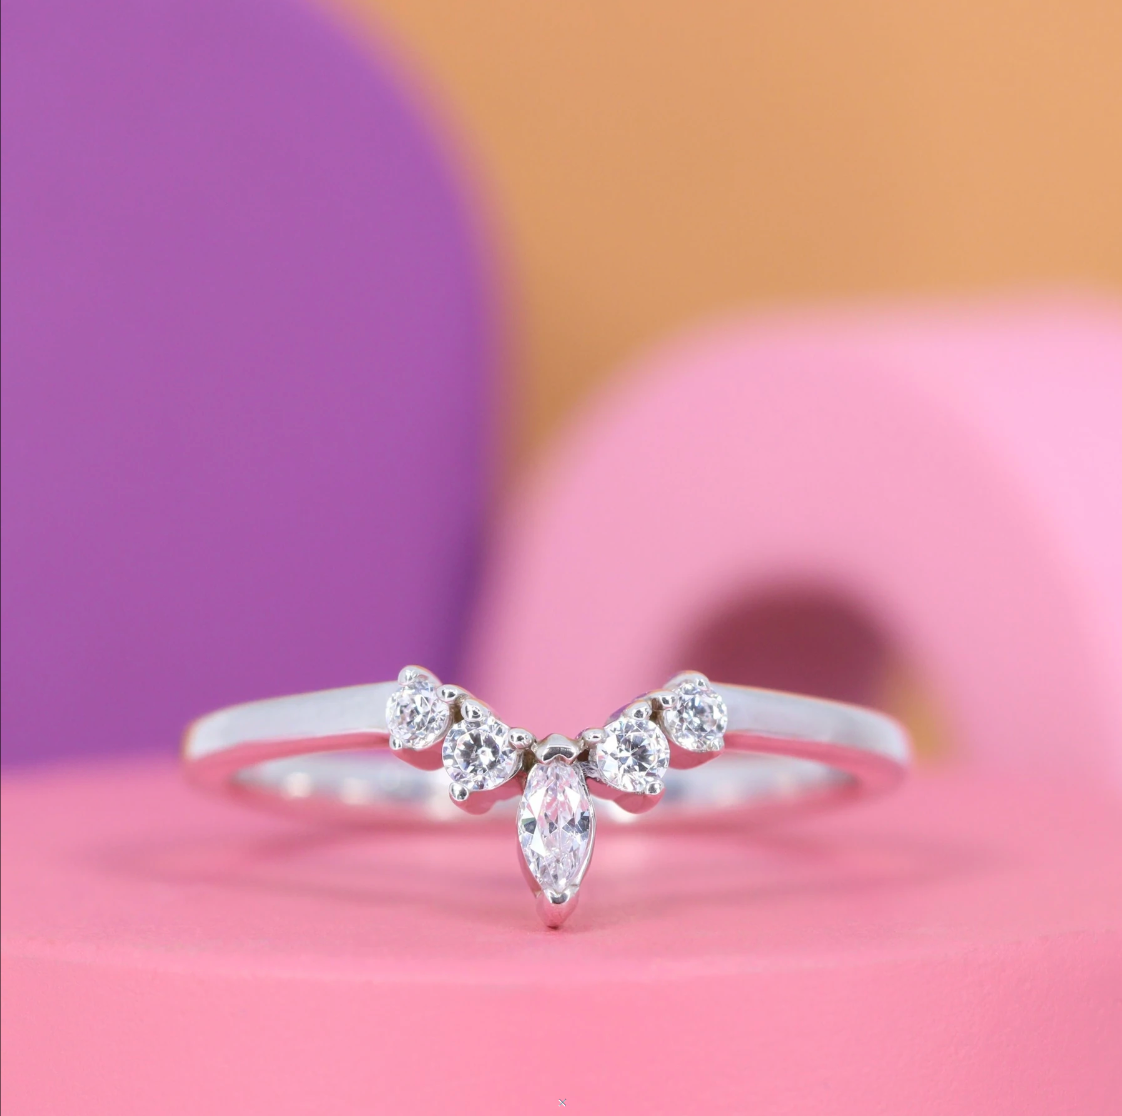 10 best simple engagement rings - Shining Diamonds